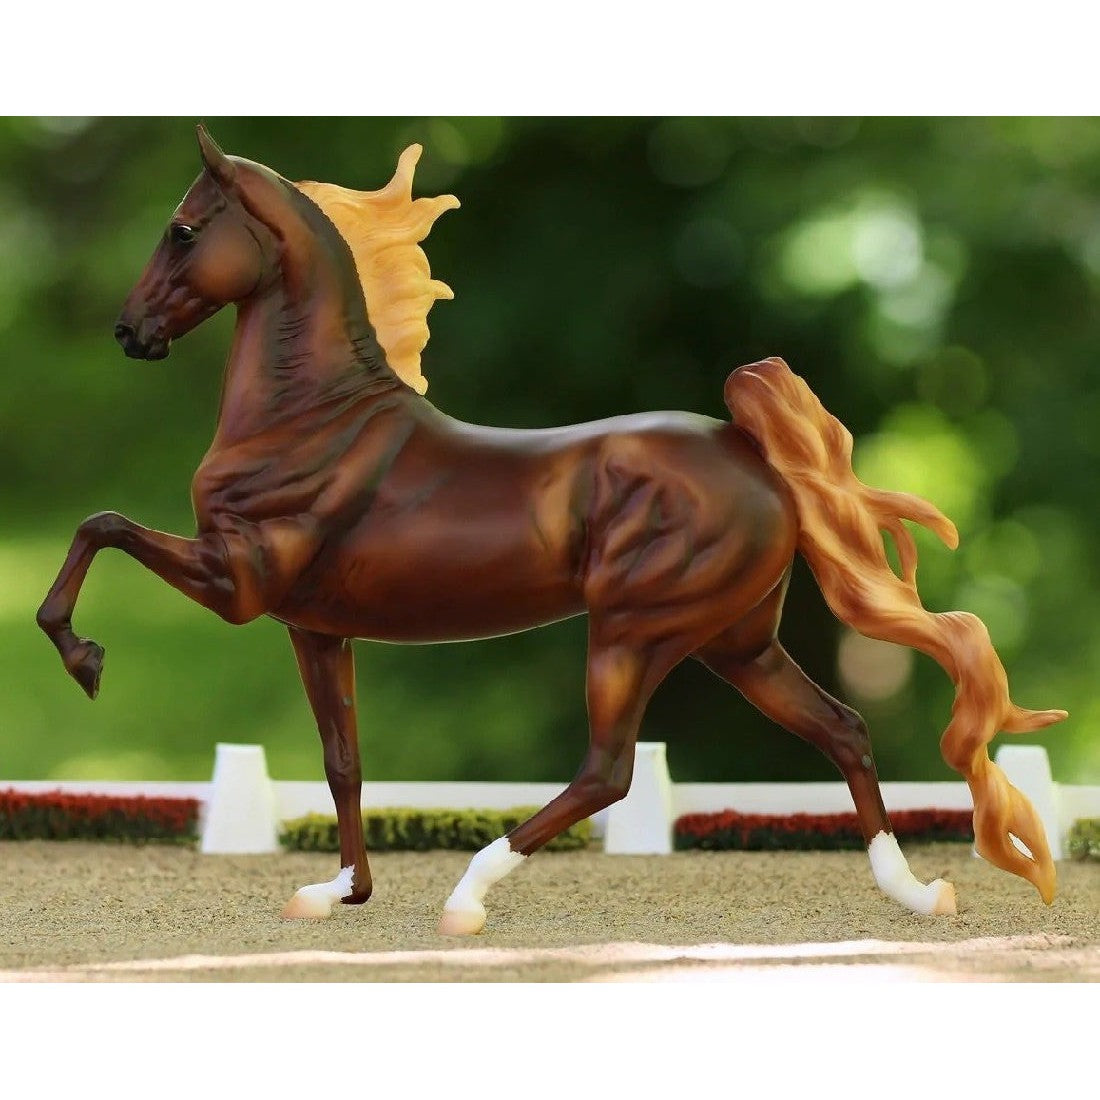 Breyer Horse Toys model with chestnut coat, prancing pose, on grass.